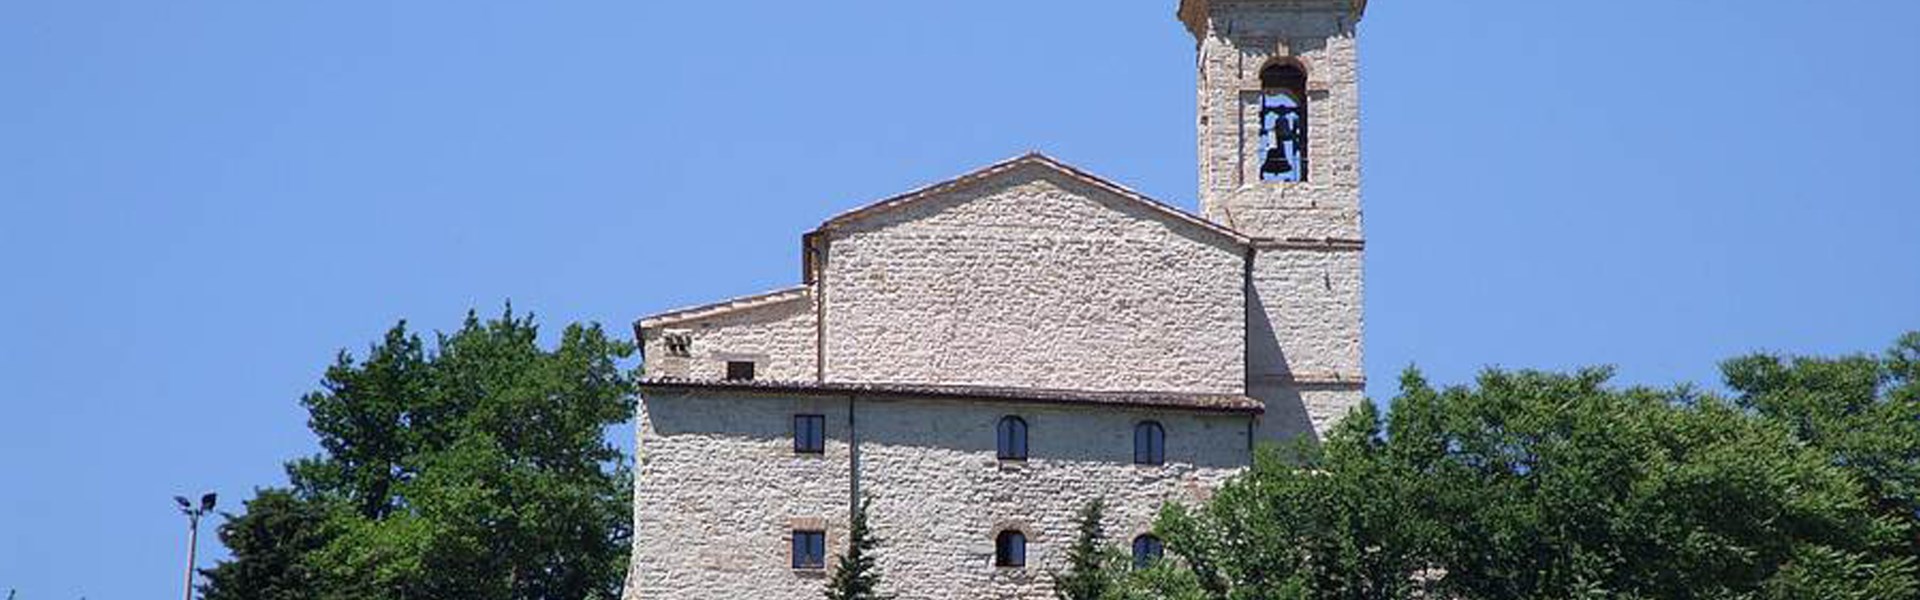 Cessapalombo - veduta chiesa S. Benedetto